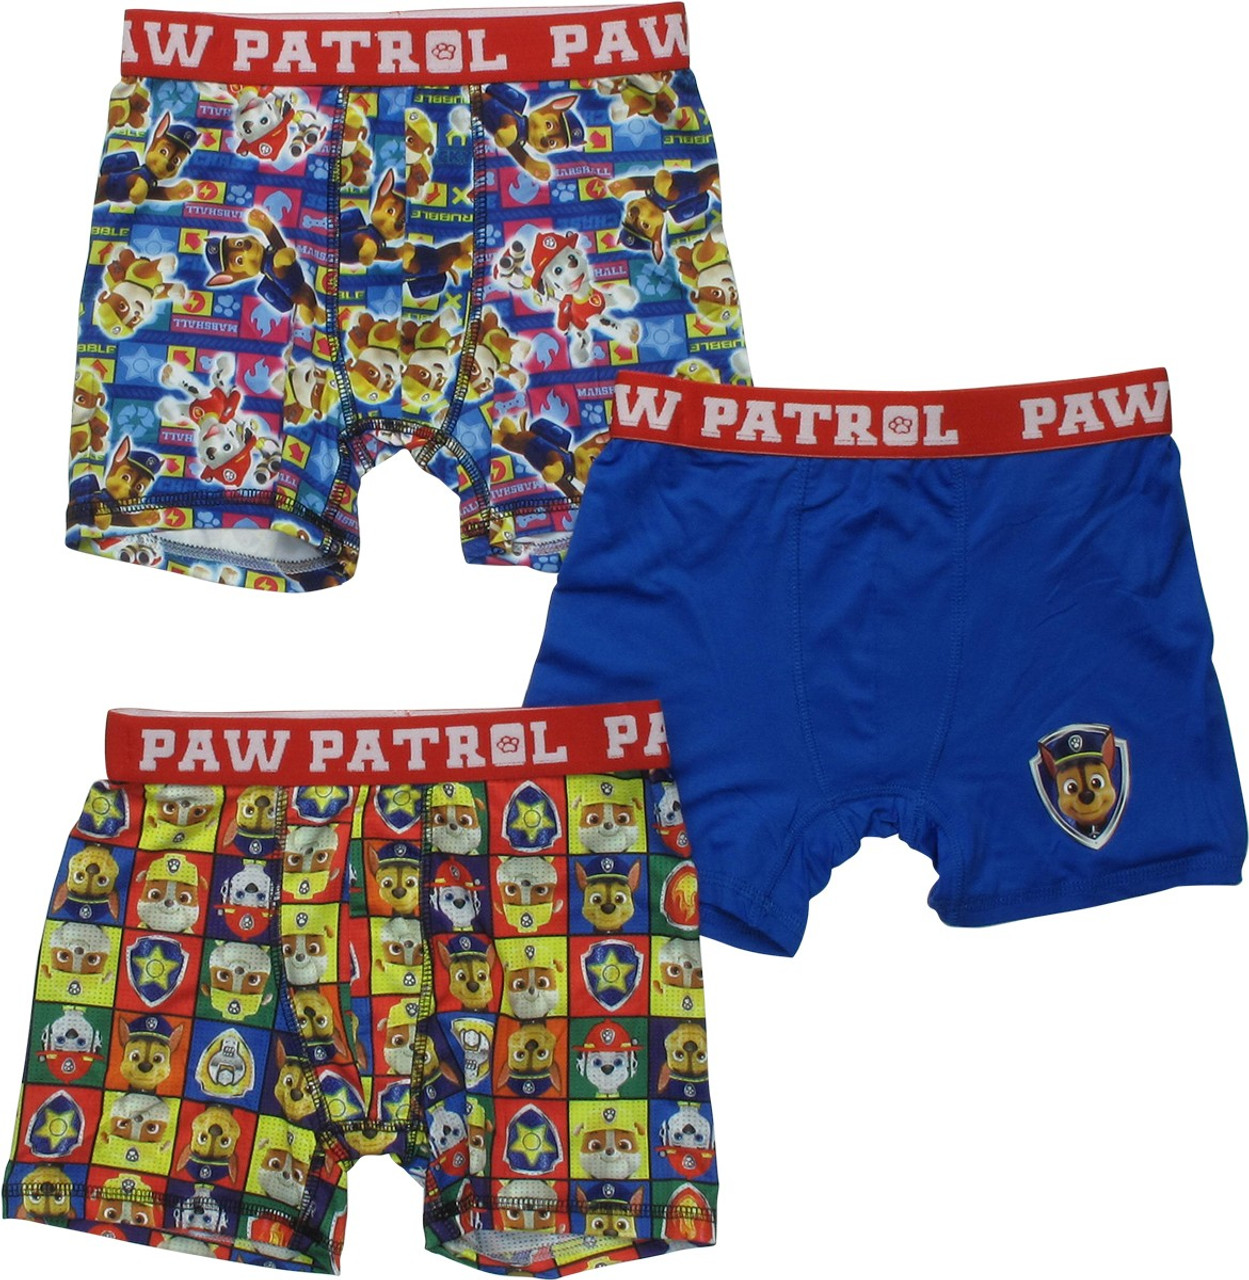 Paw Patrol Boys' 5-Pack Briefs - blue/multi, 4t (Toddler) 